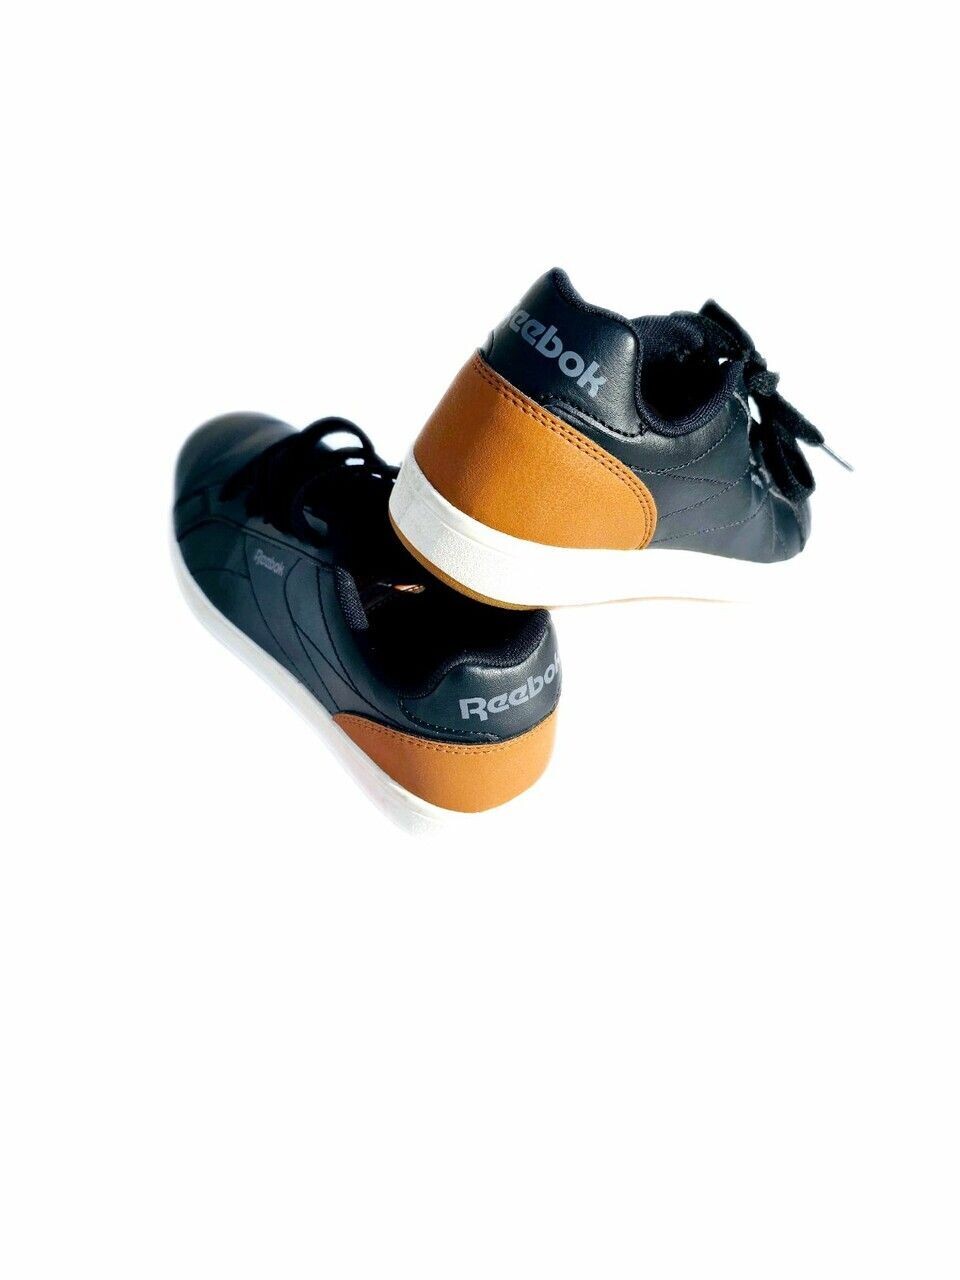 Mens Shoes Reebok Royal Complete Clean Black/Brown/Chalk